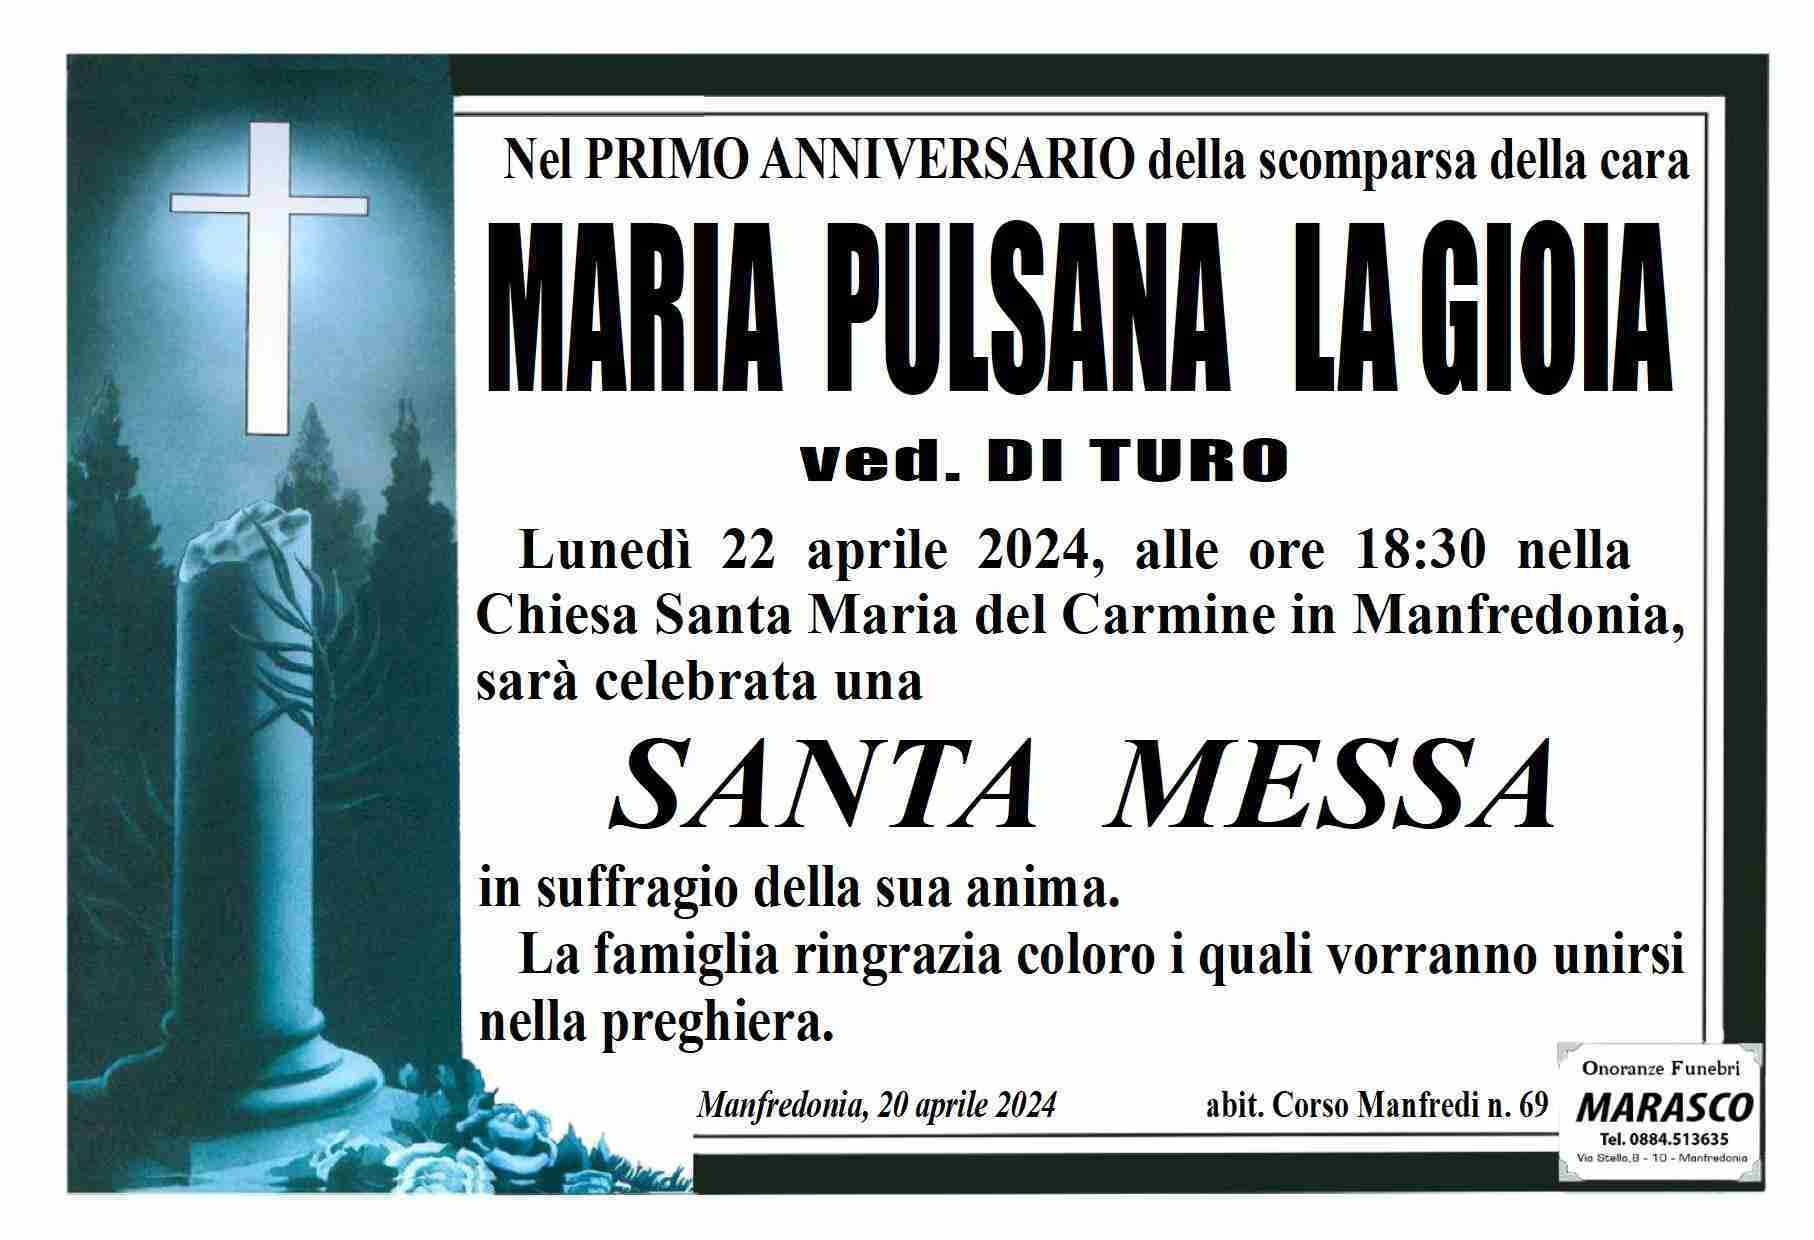 Maria Pulsana La Gioia